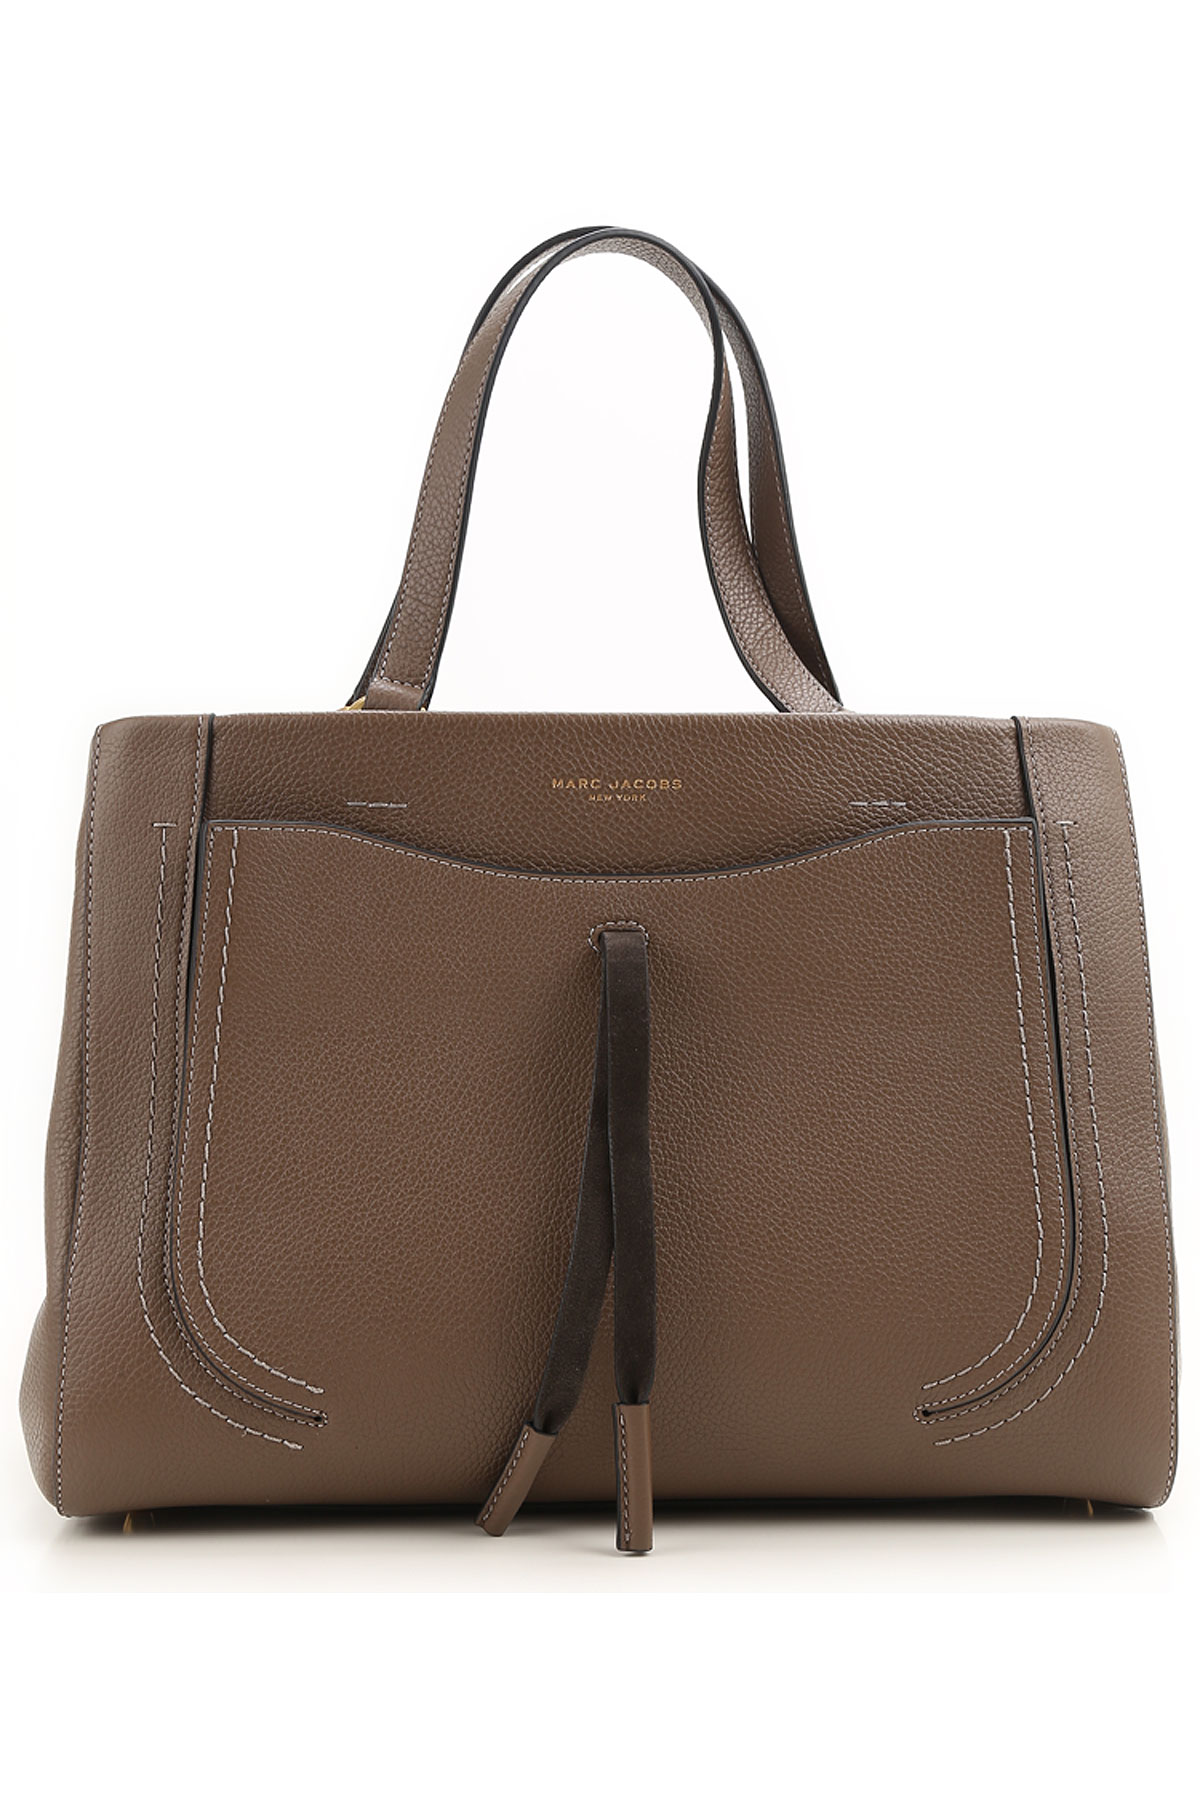 Handbags Marc Jacobs, Style code: m0009543-242-